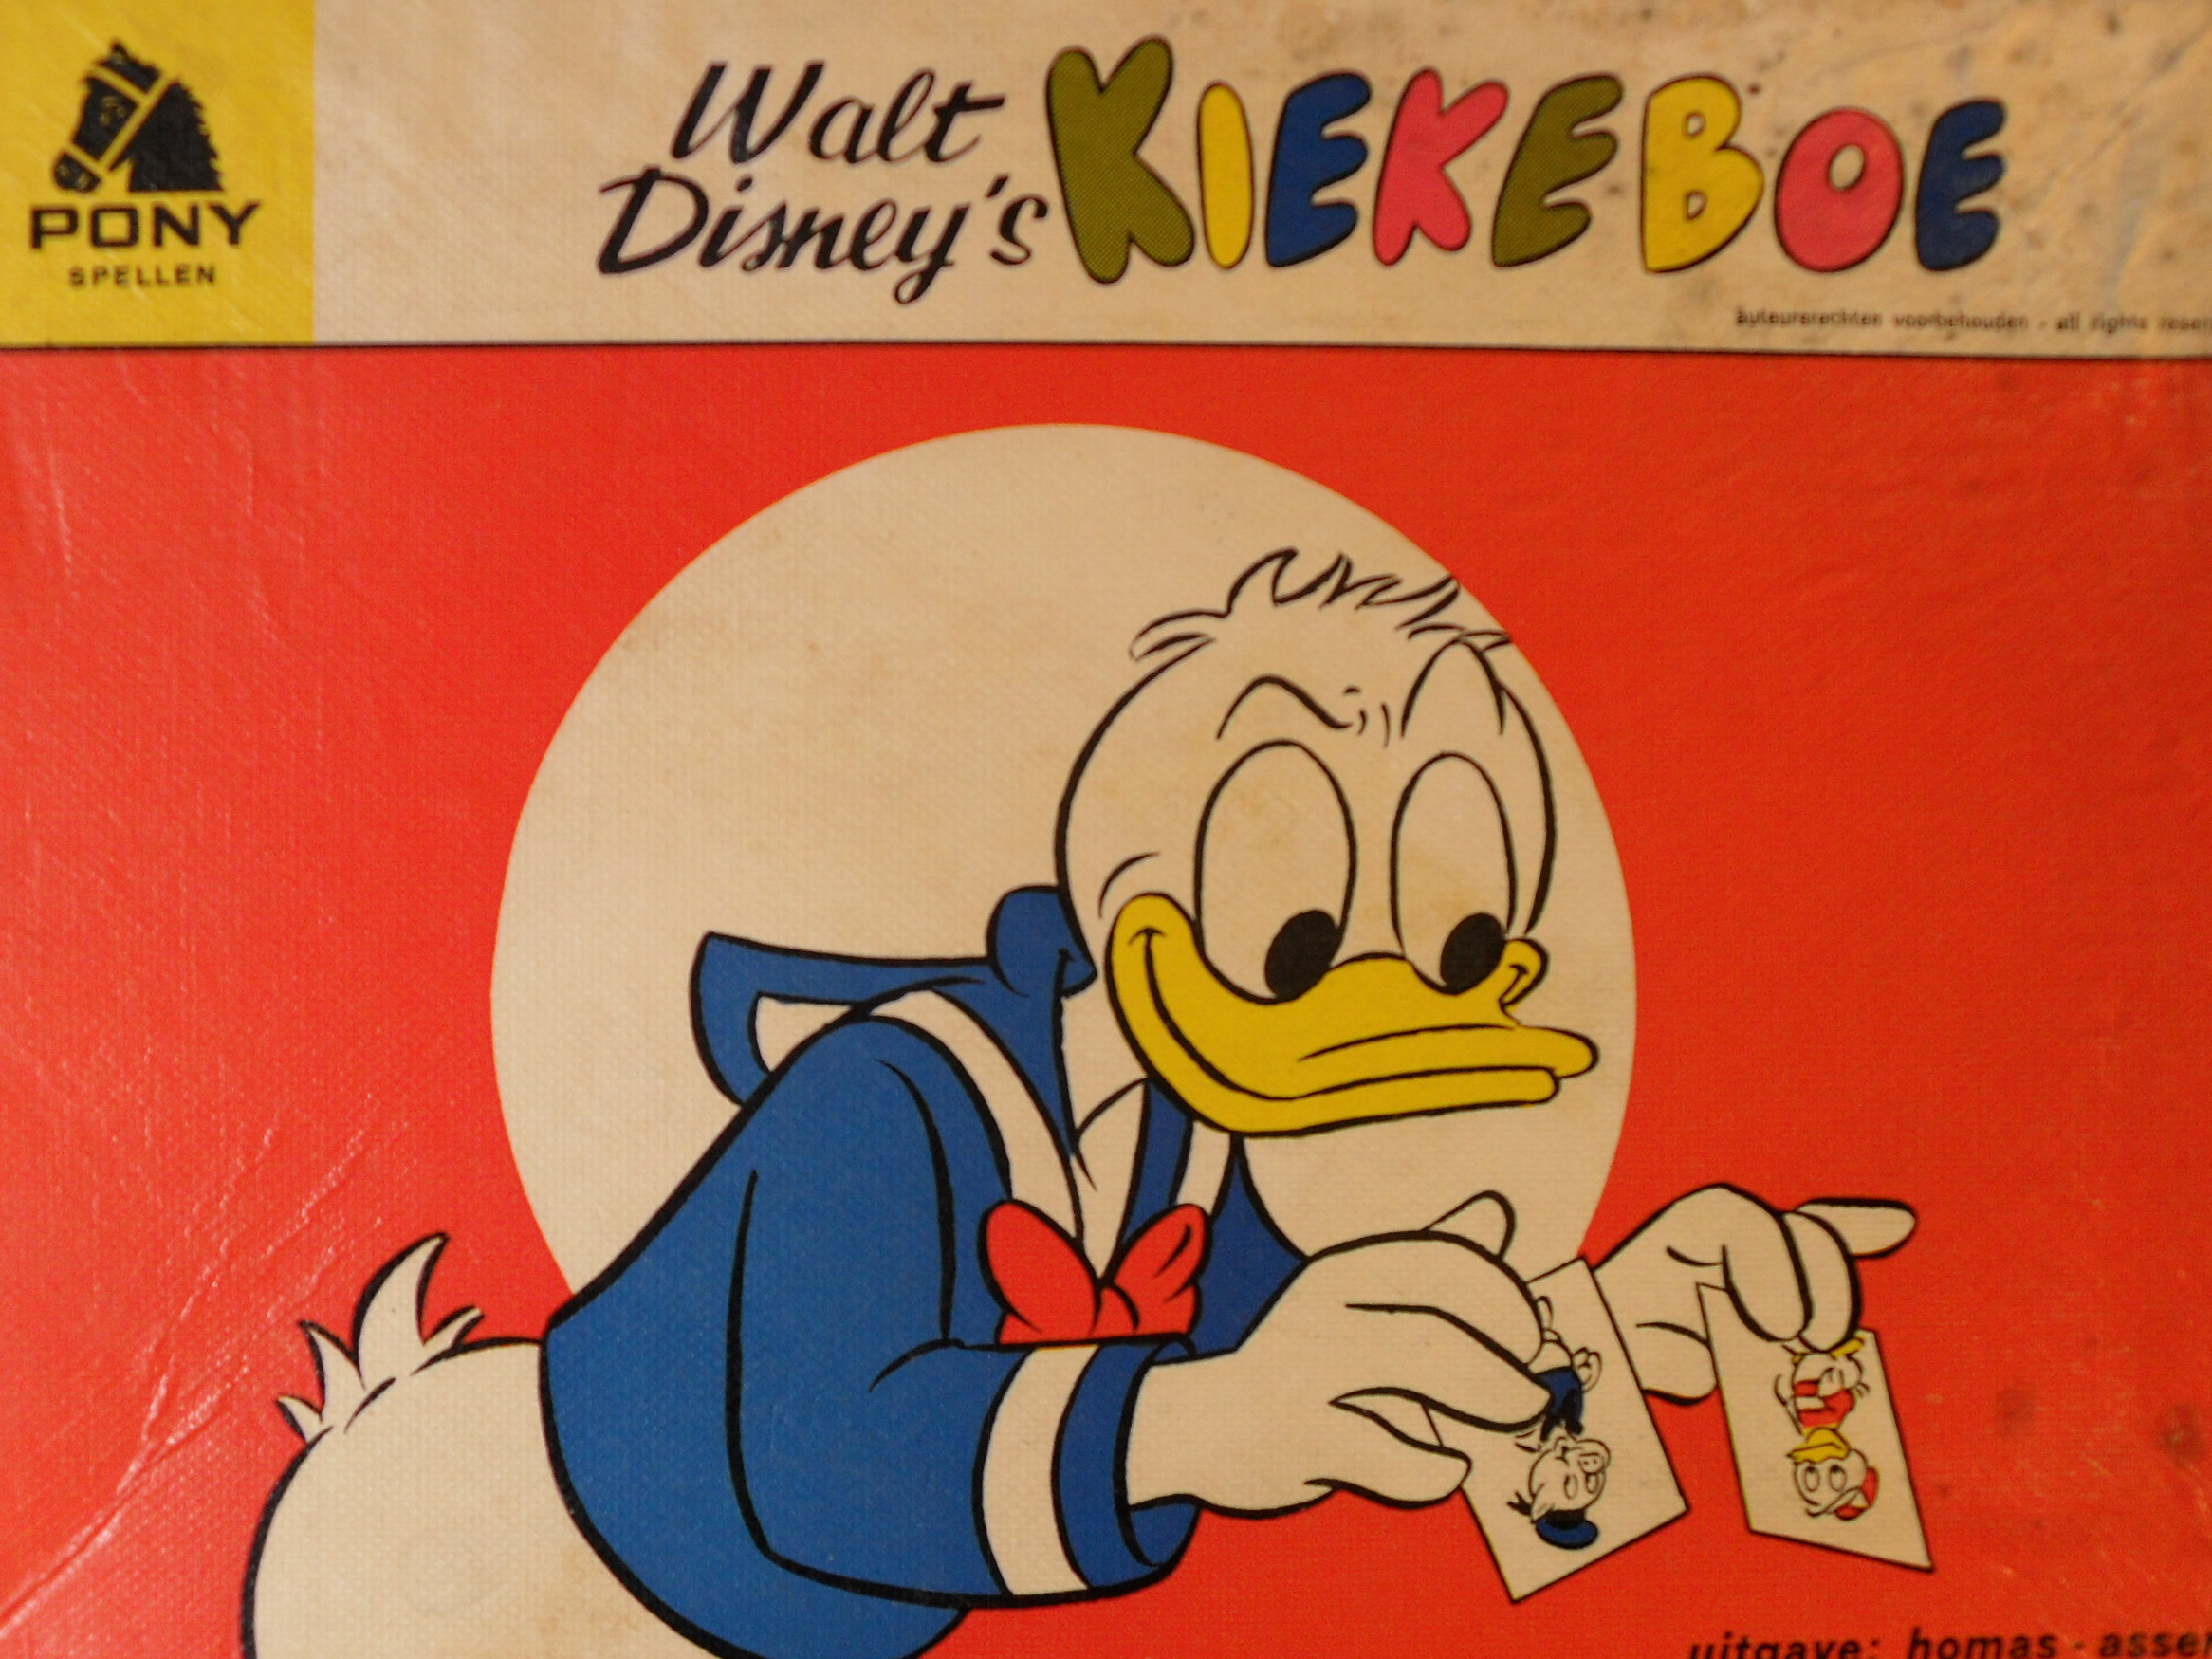 Kiekeboe - Walt Disney’s